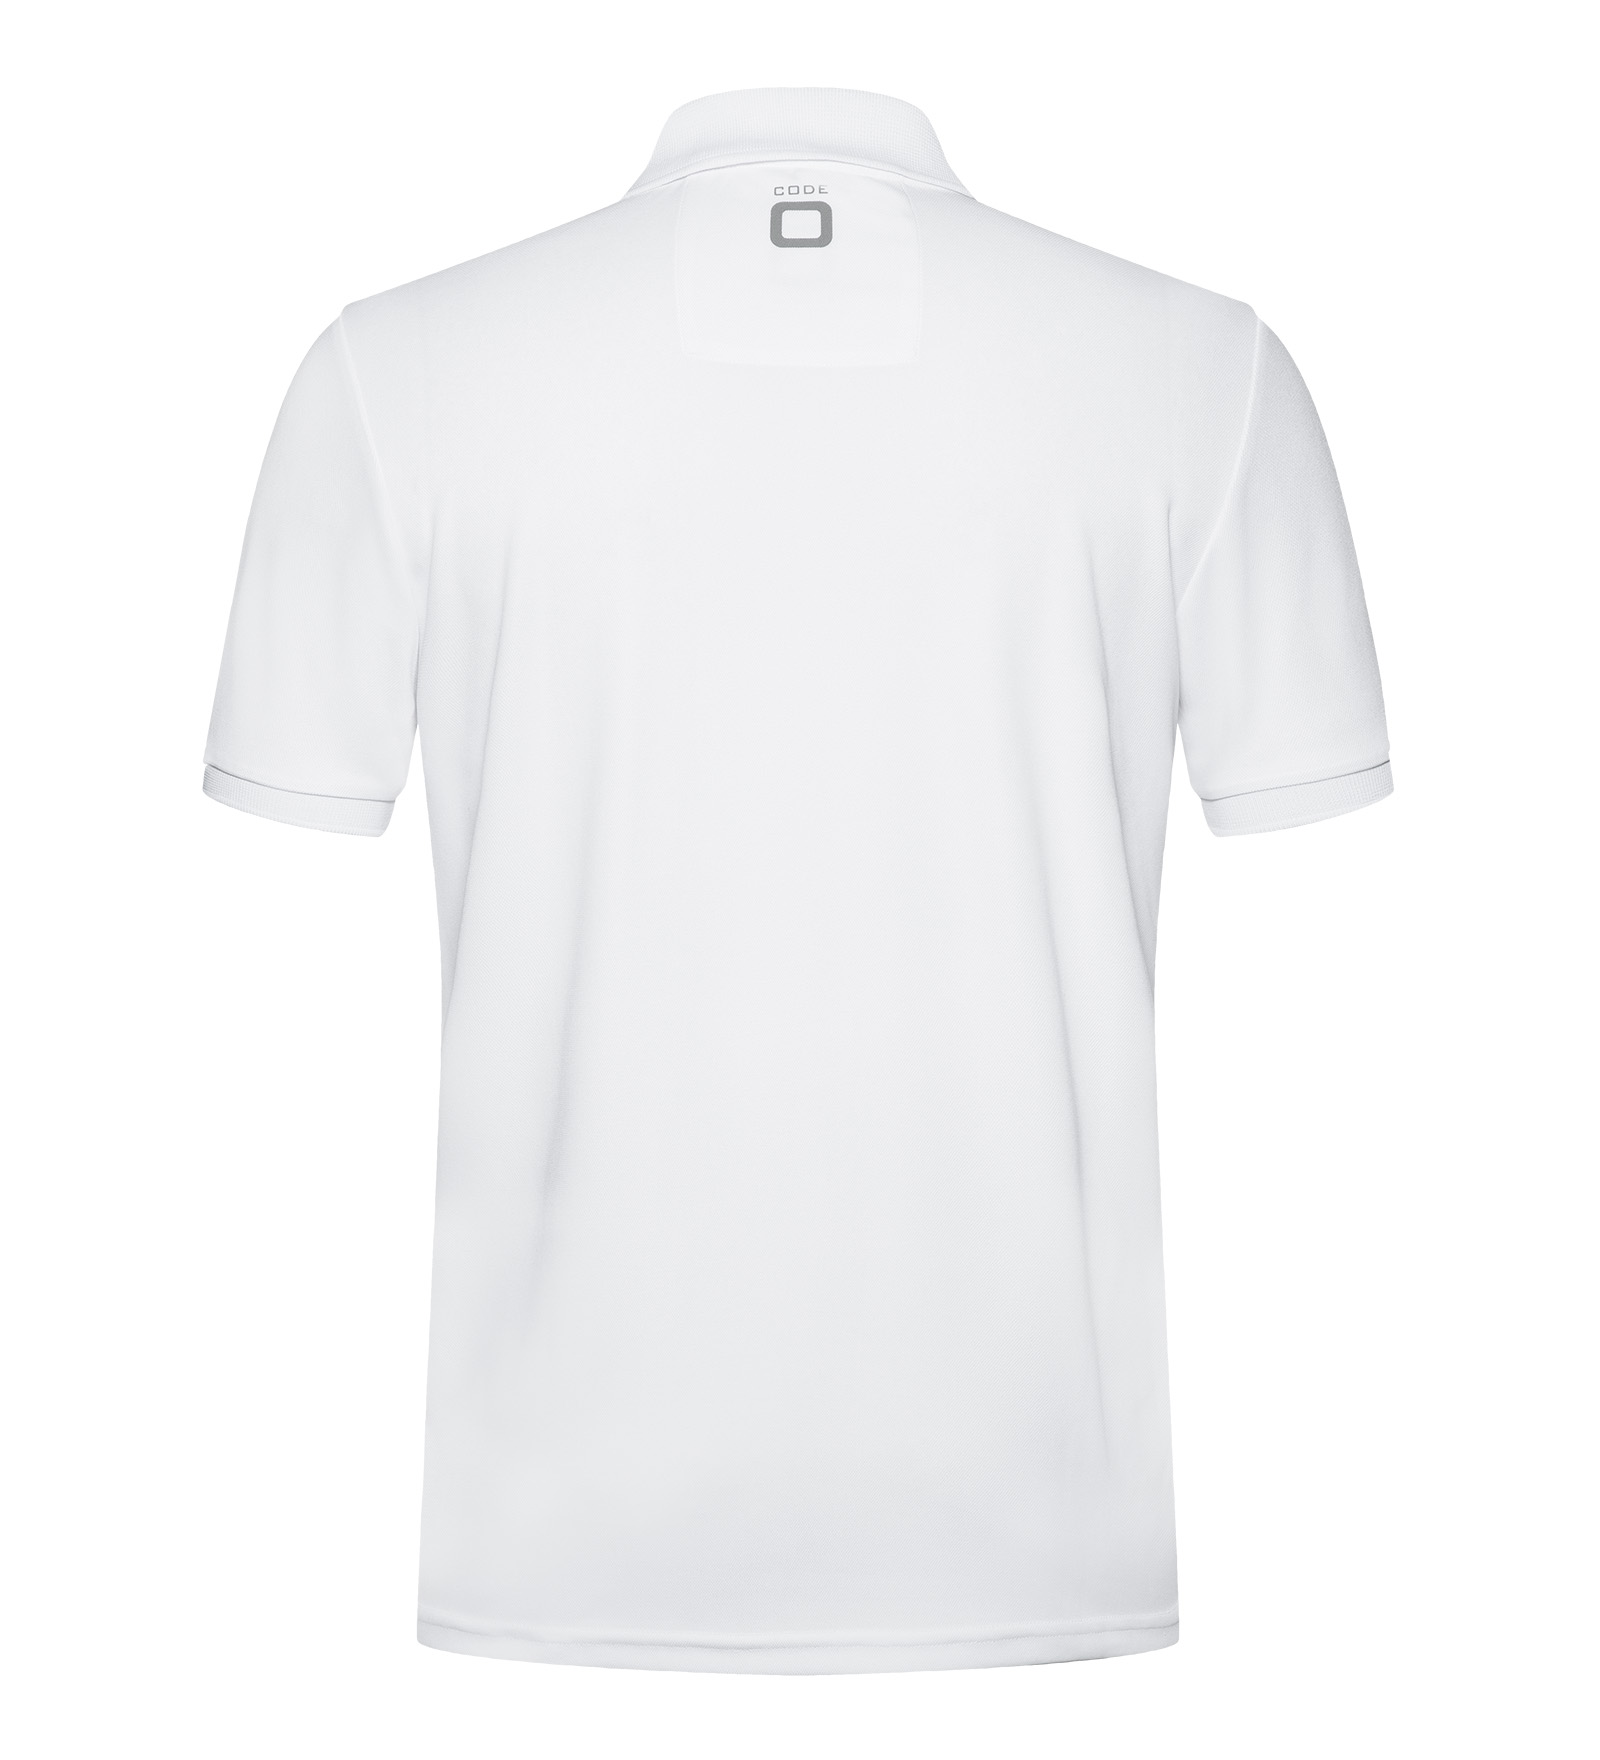 Polo shirt quick-dry white